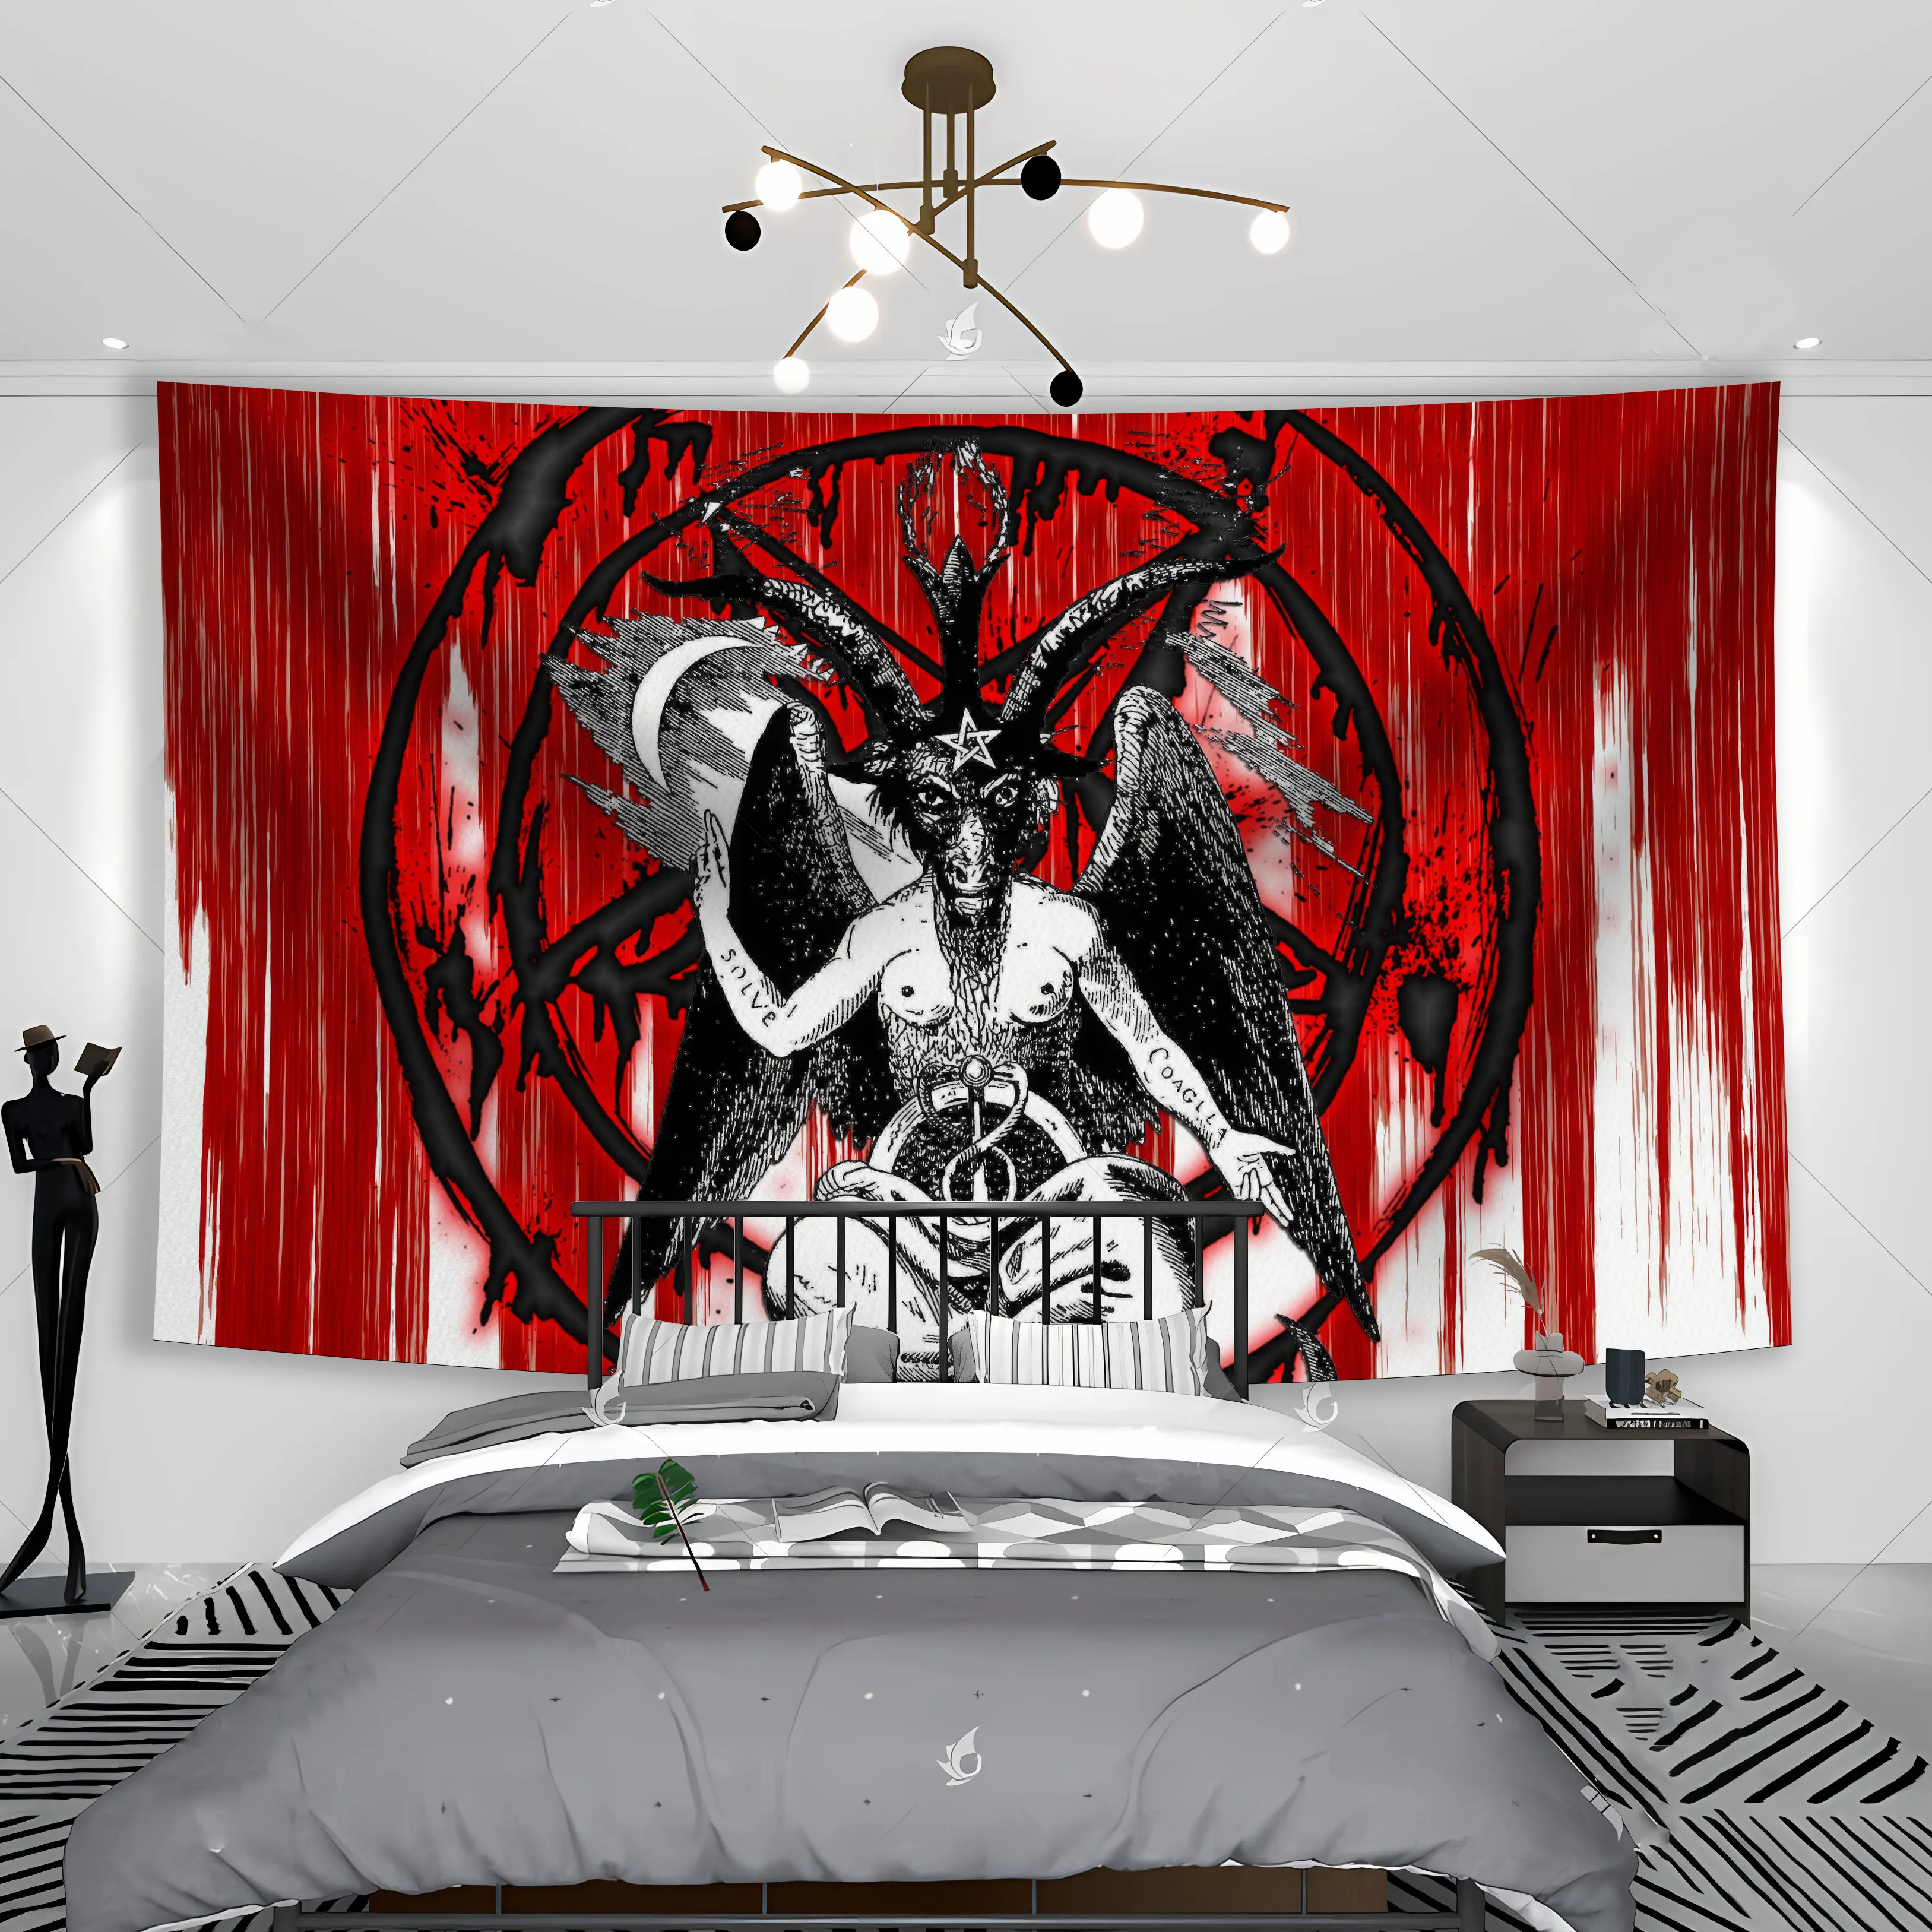 Satanic Tapestry